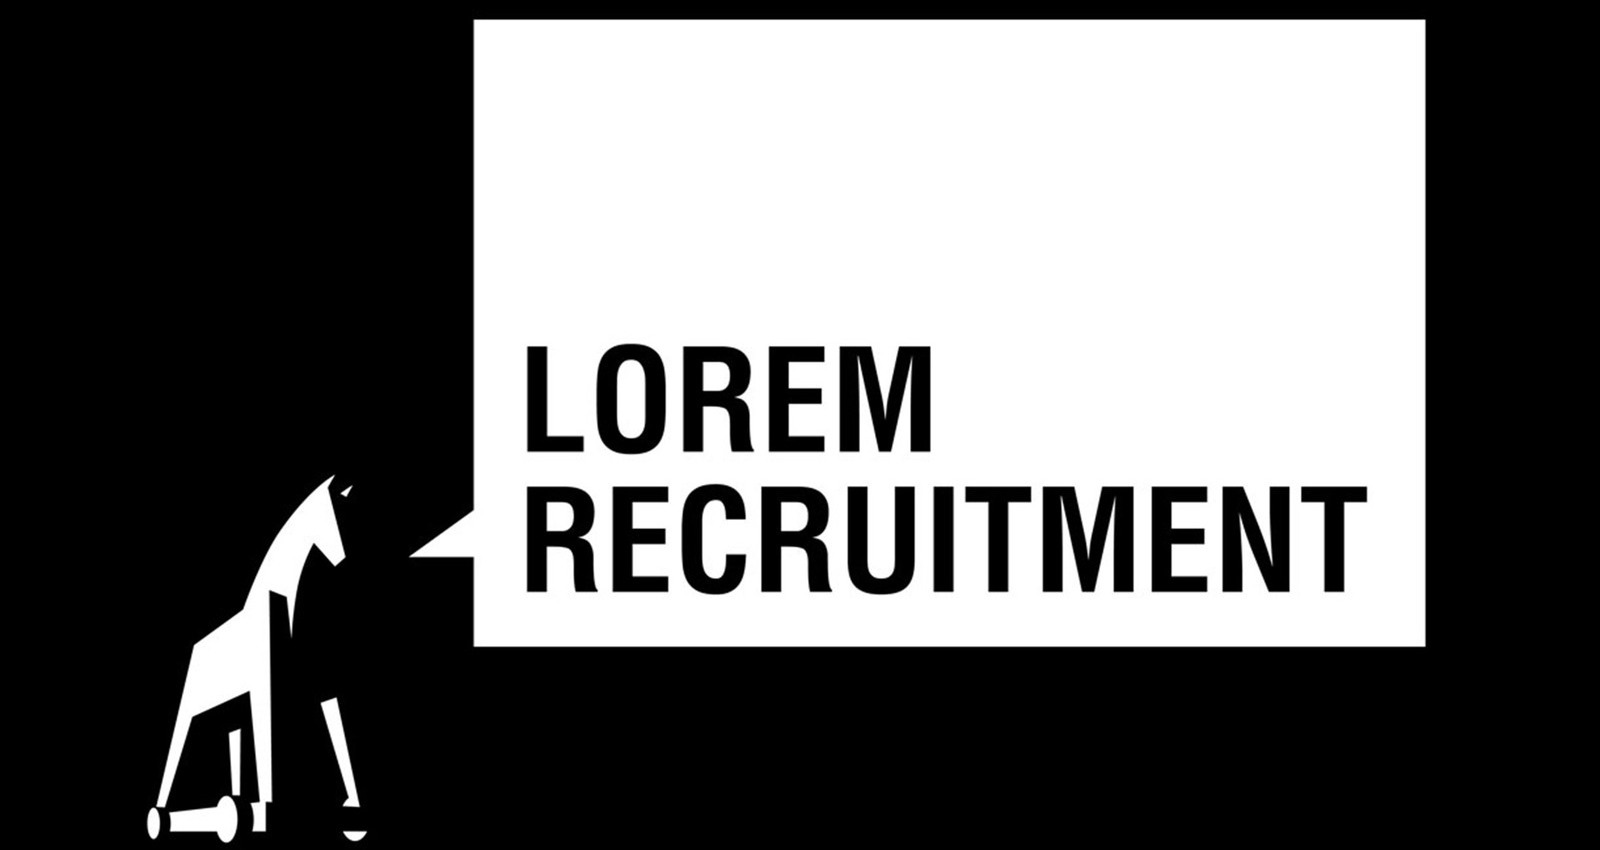 Lorem Recruitment